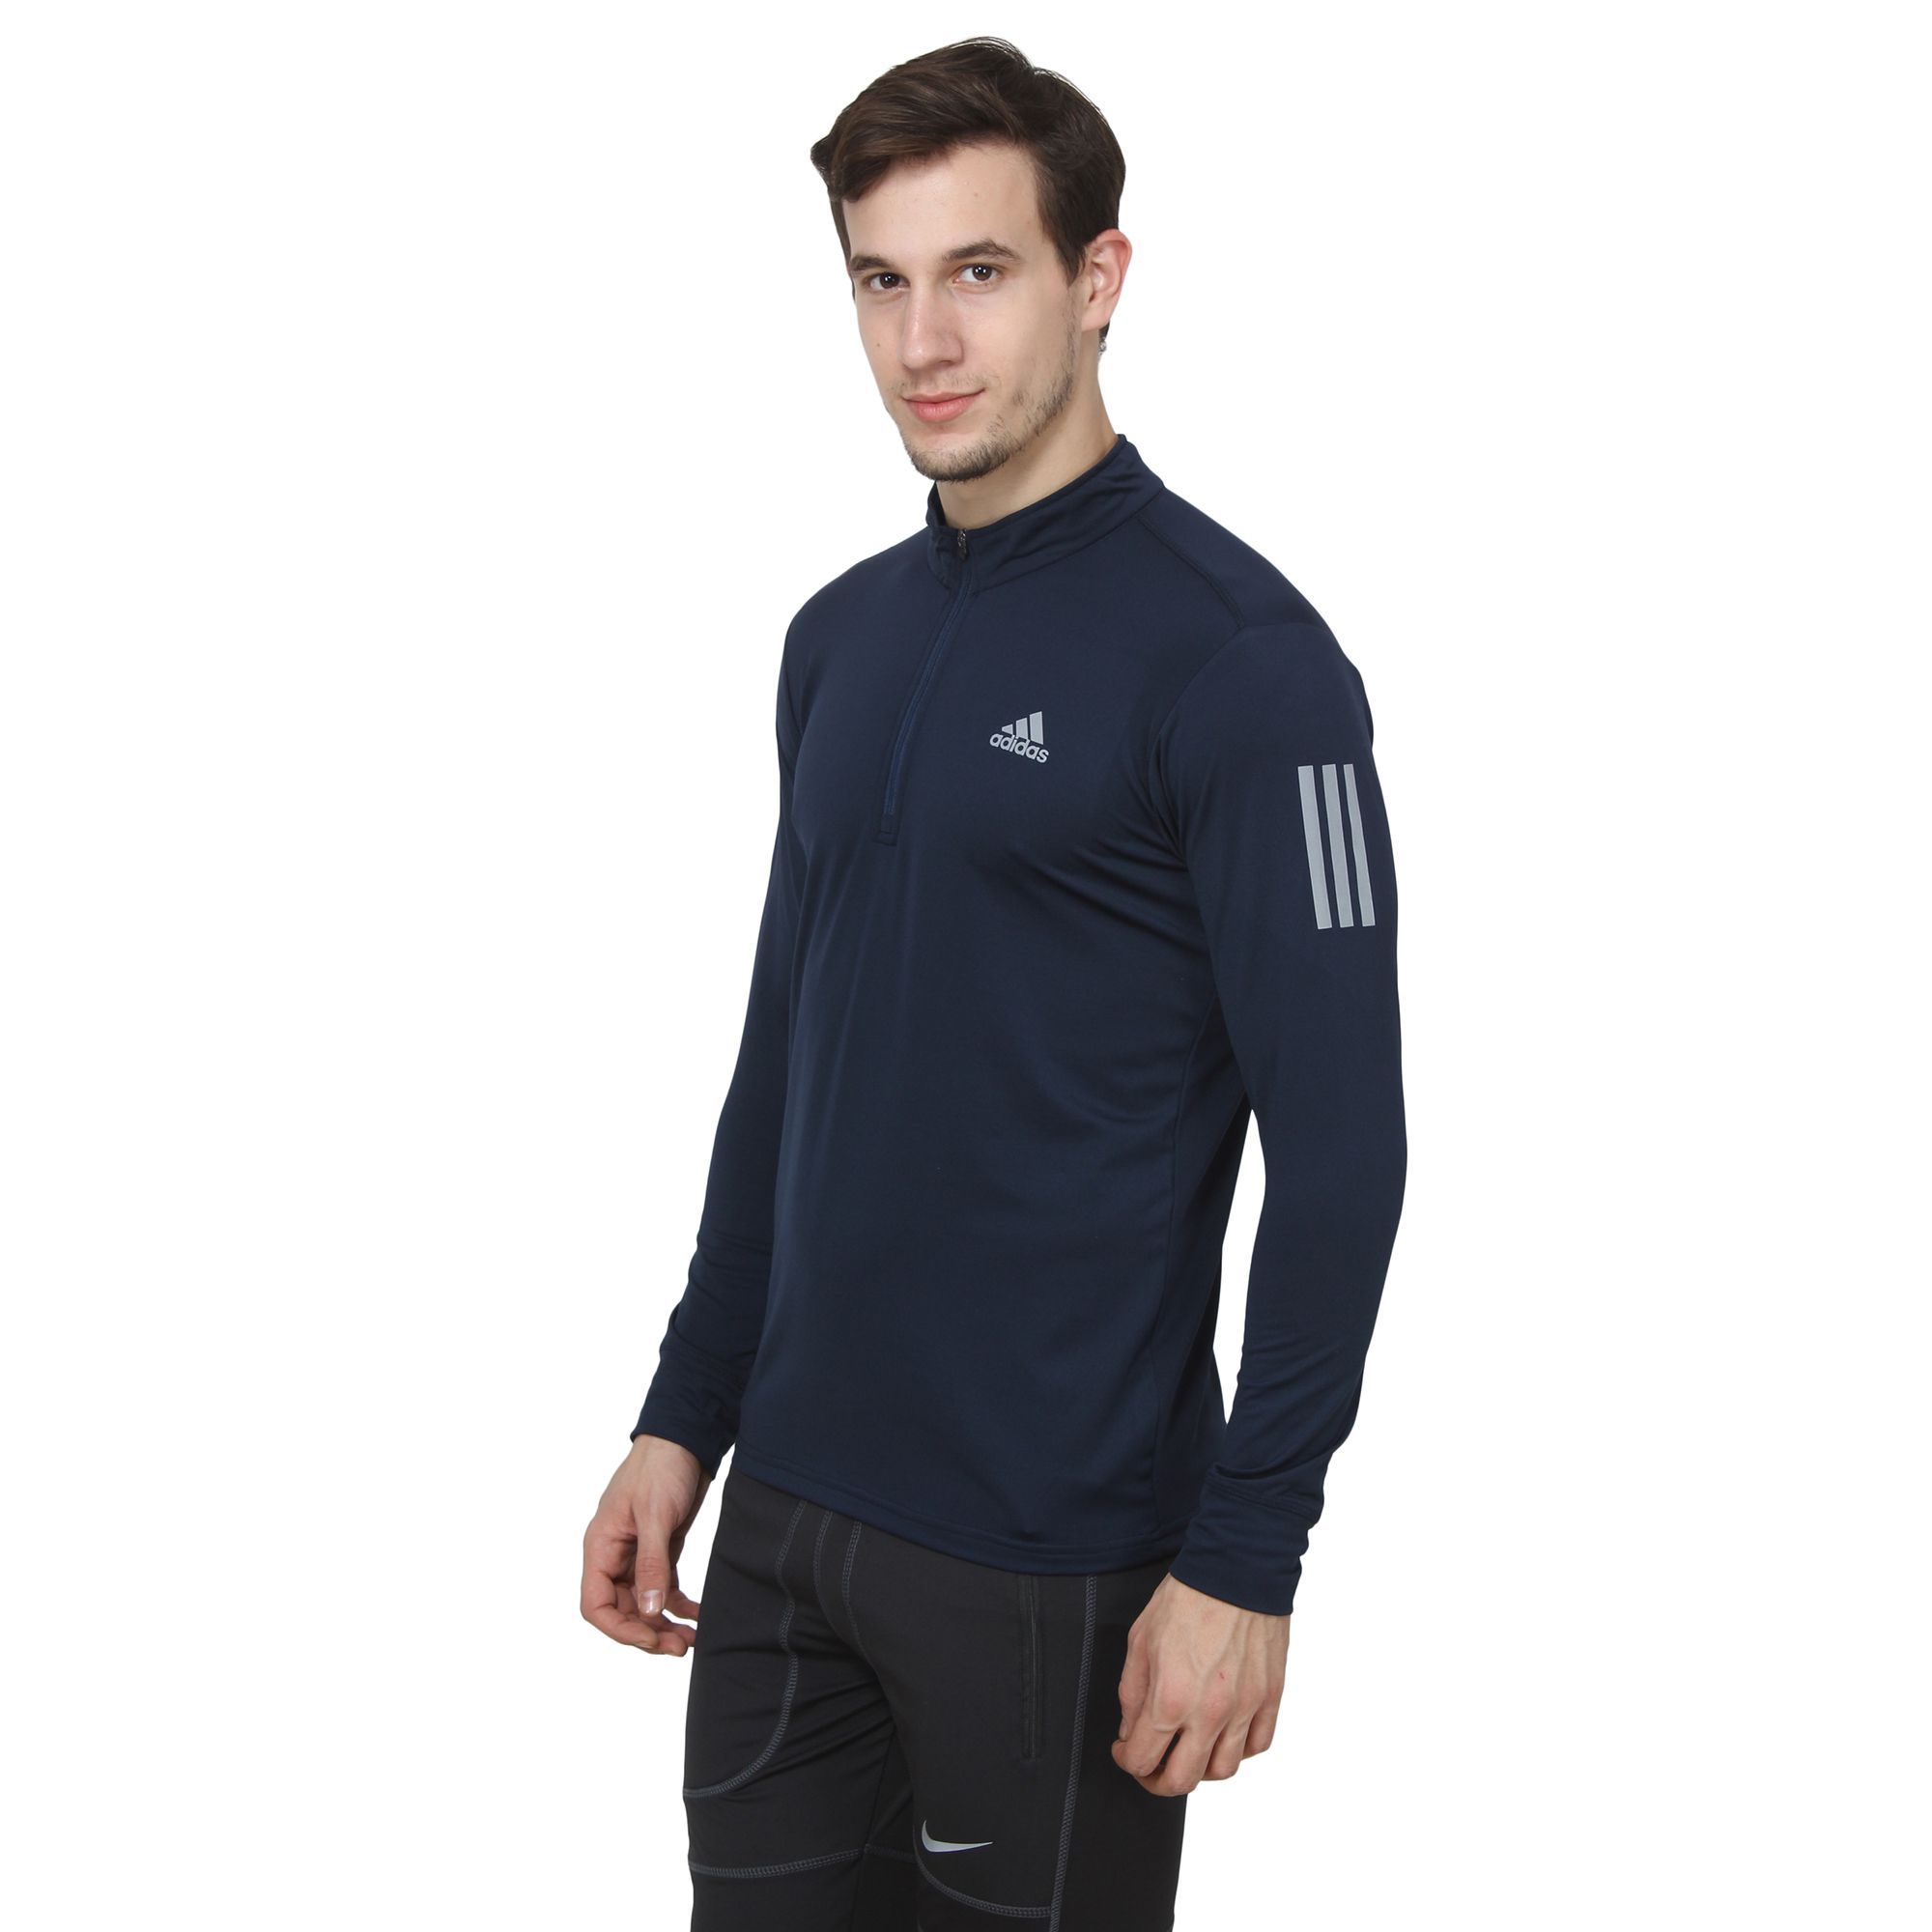 Adidas Navy High Neck T-Shirt - Buy 